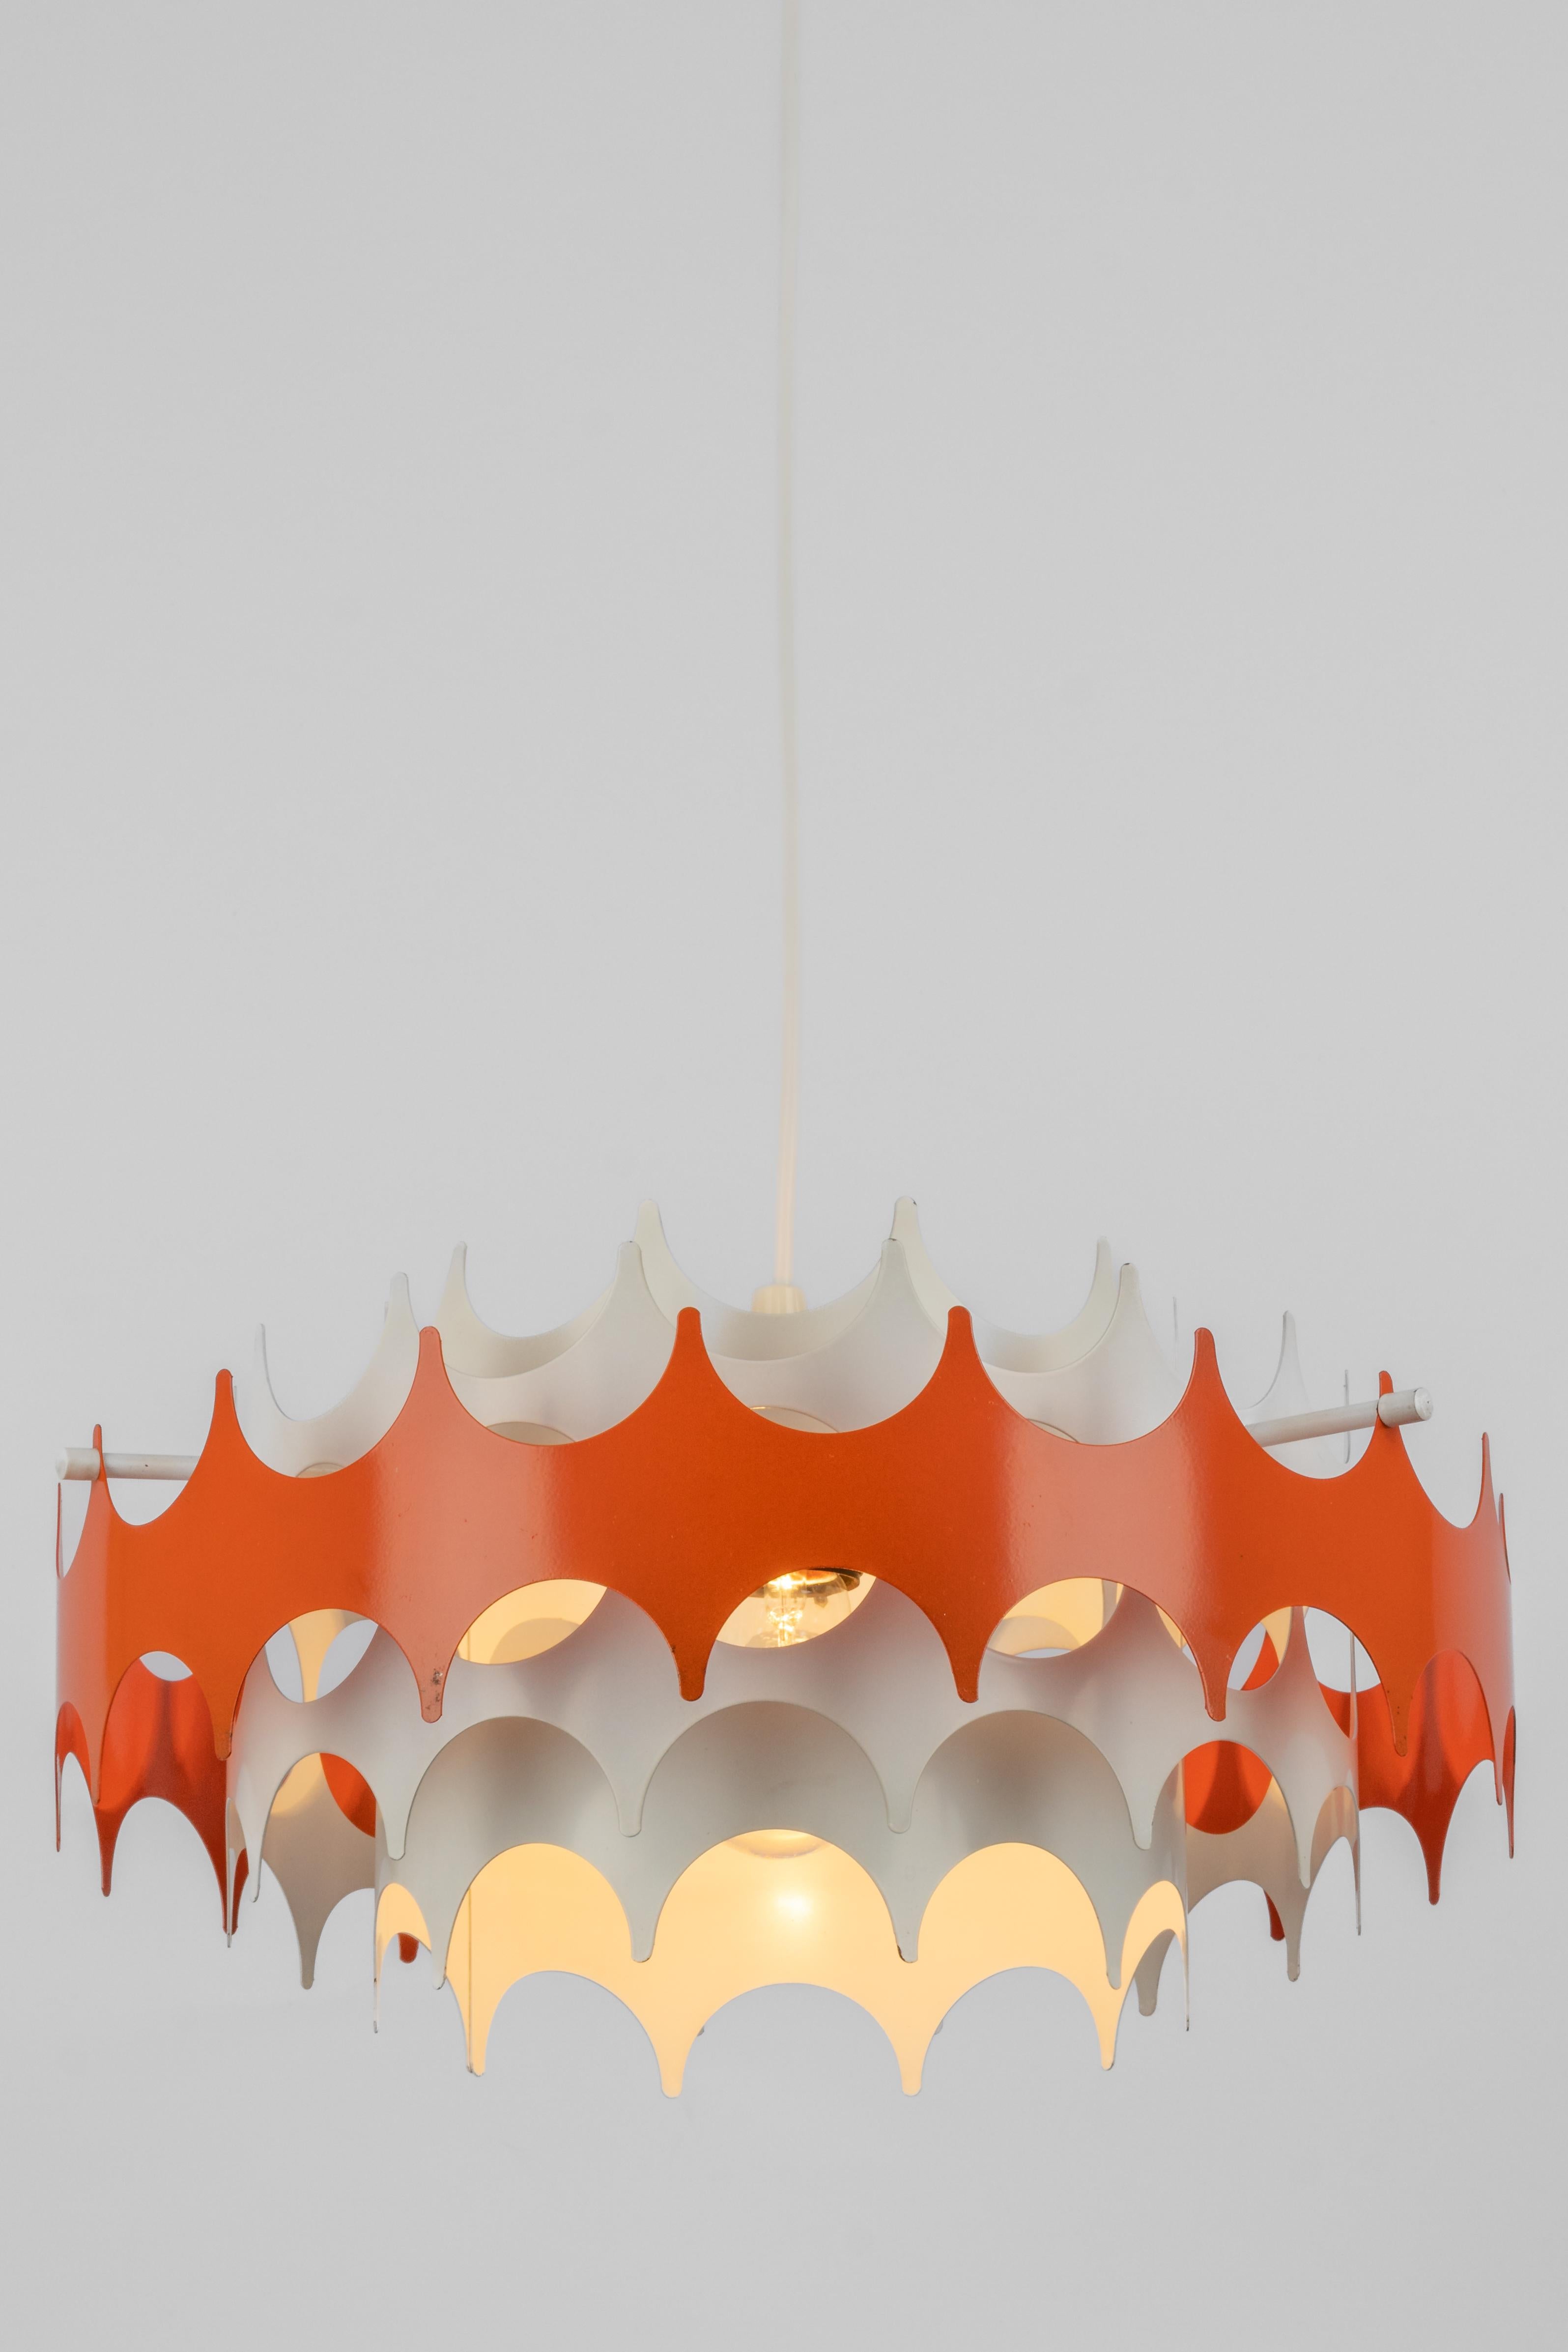 Sputnik Metal Pendant Light by Doria, Germany, 1960s For Sale 1